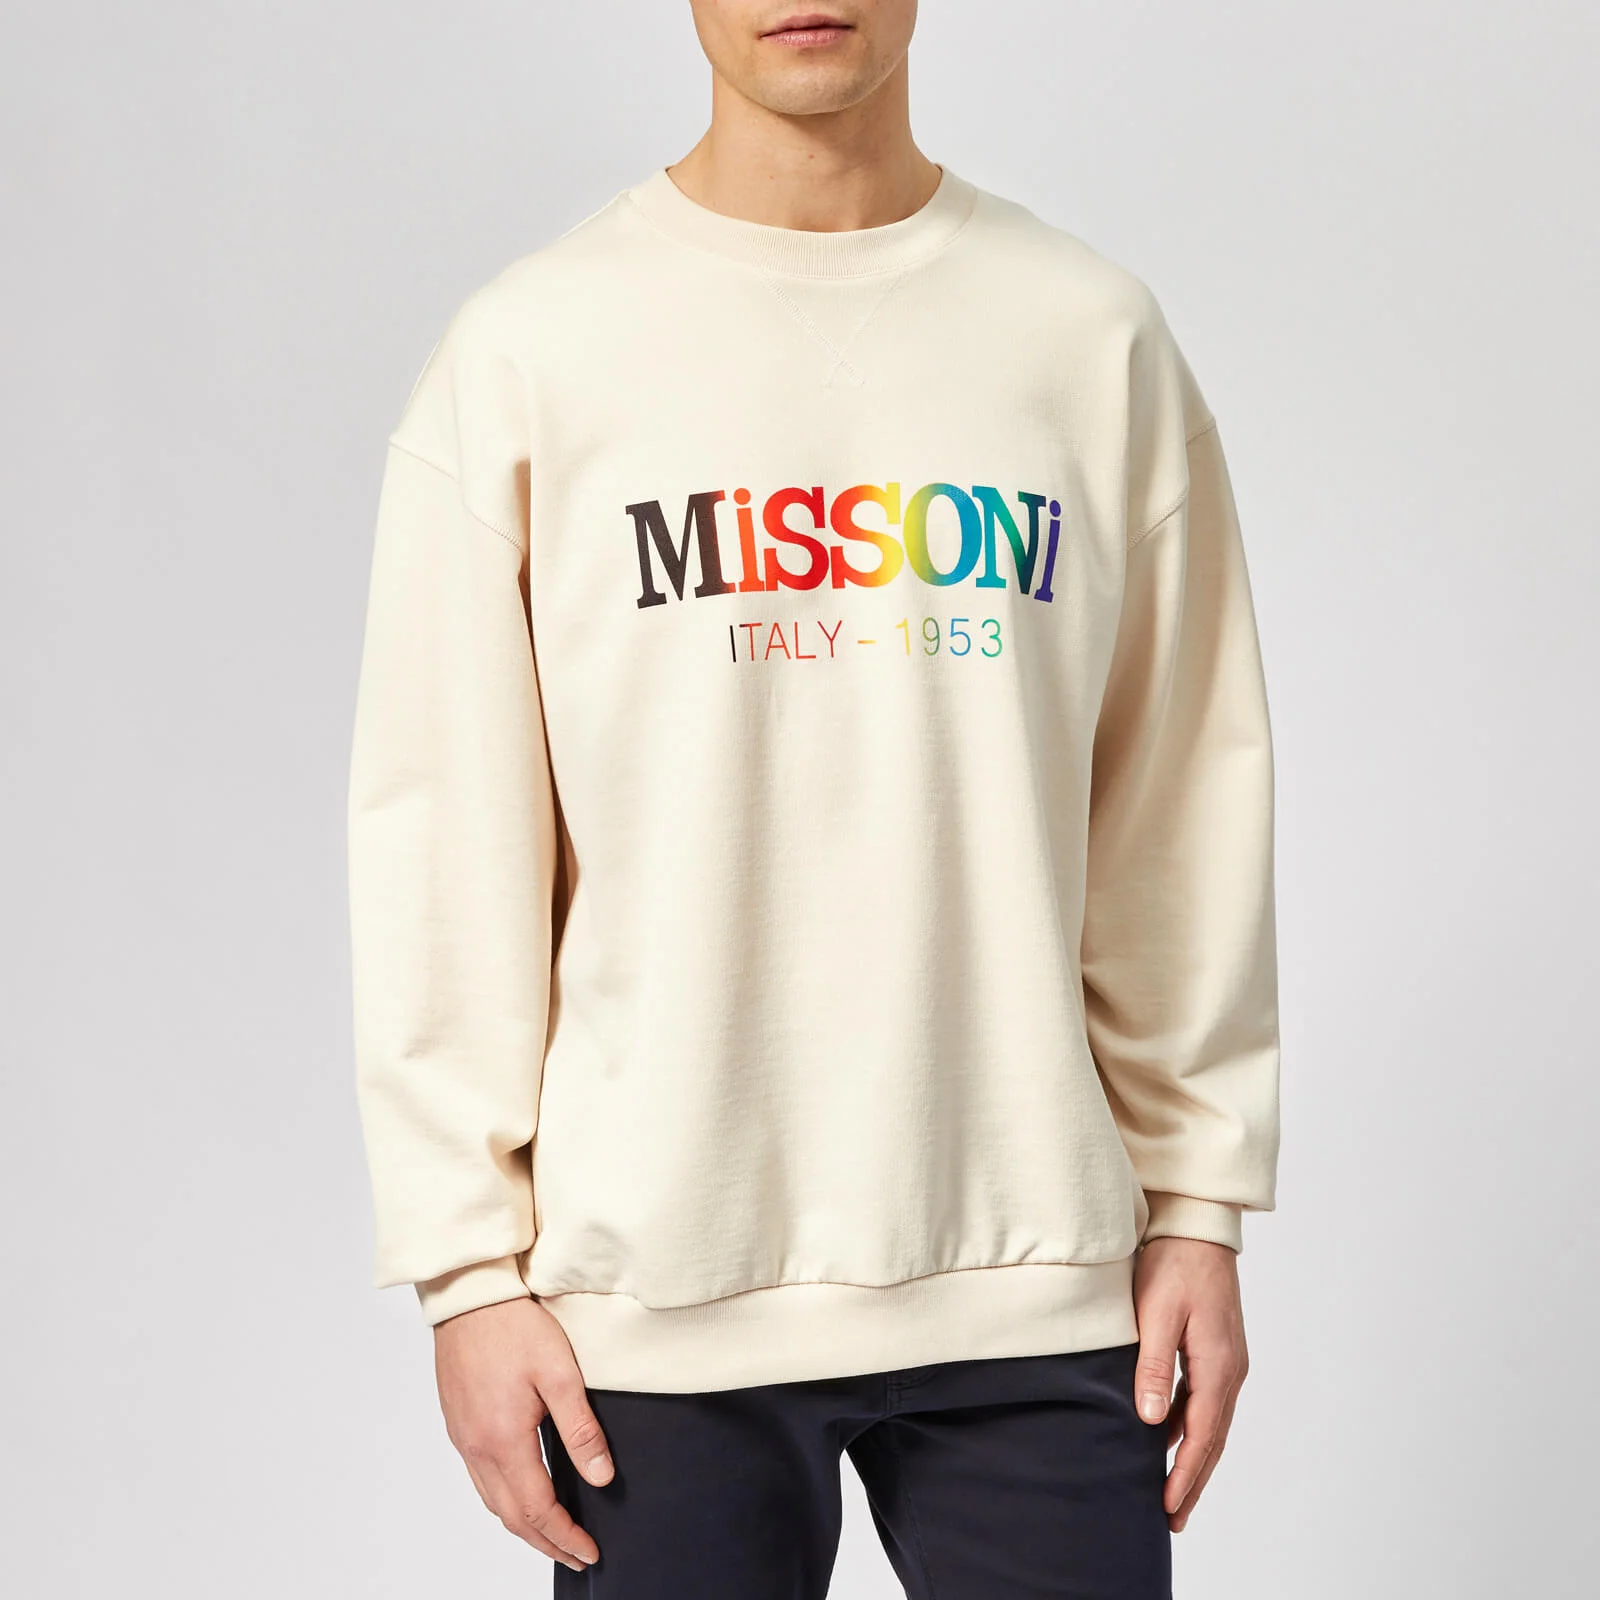 Missoni Men's Logo Sweatshirt - Off White Image 1